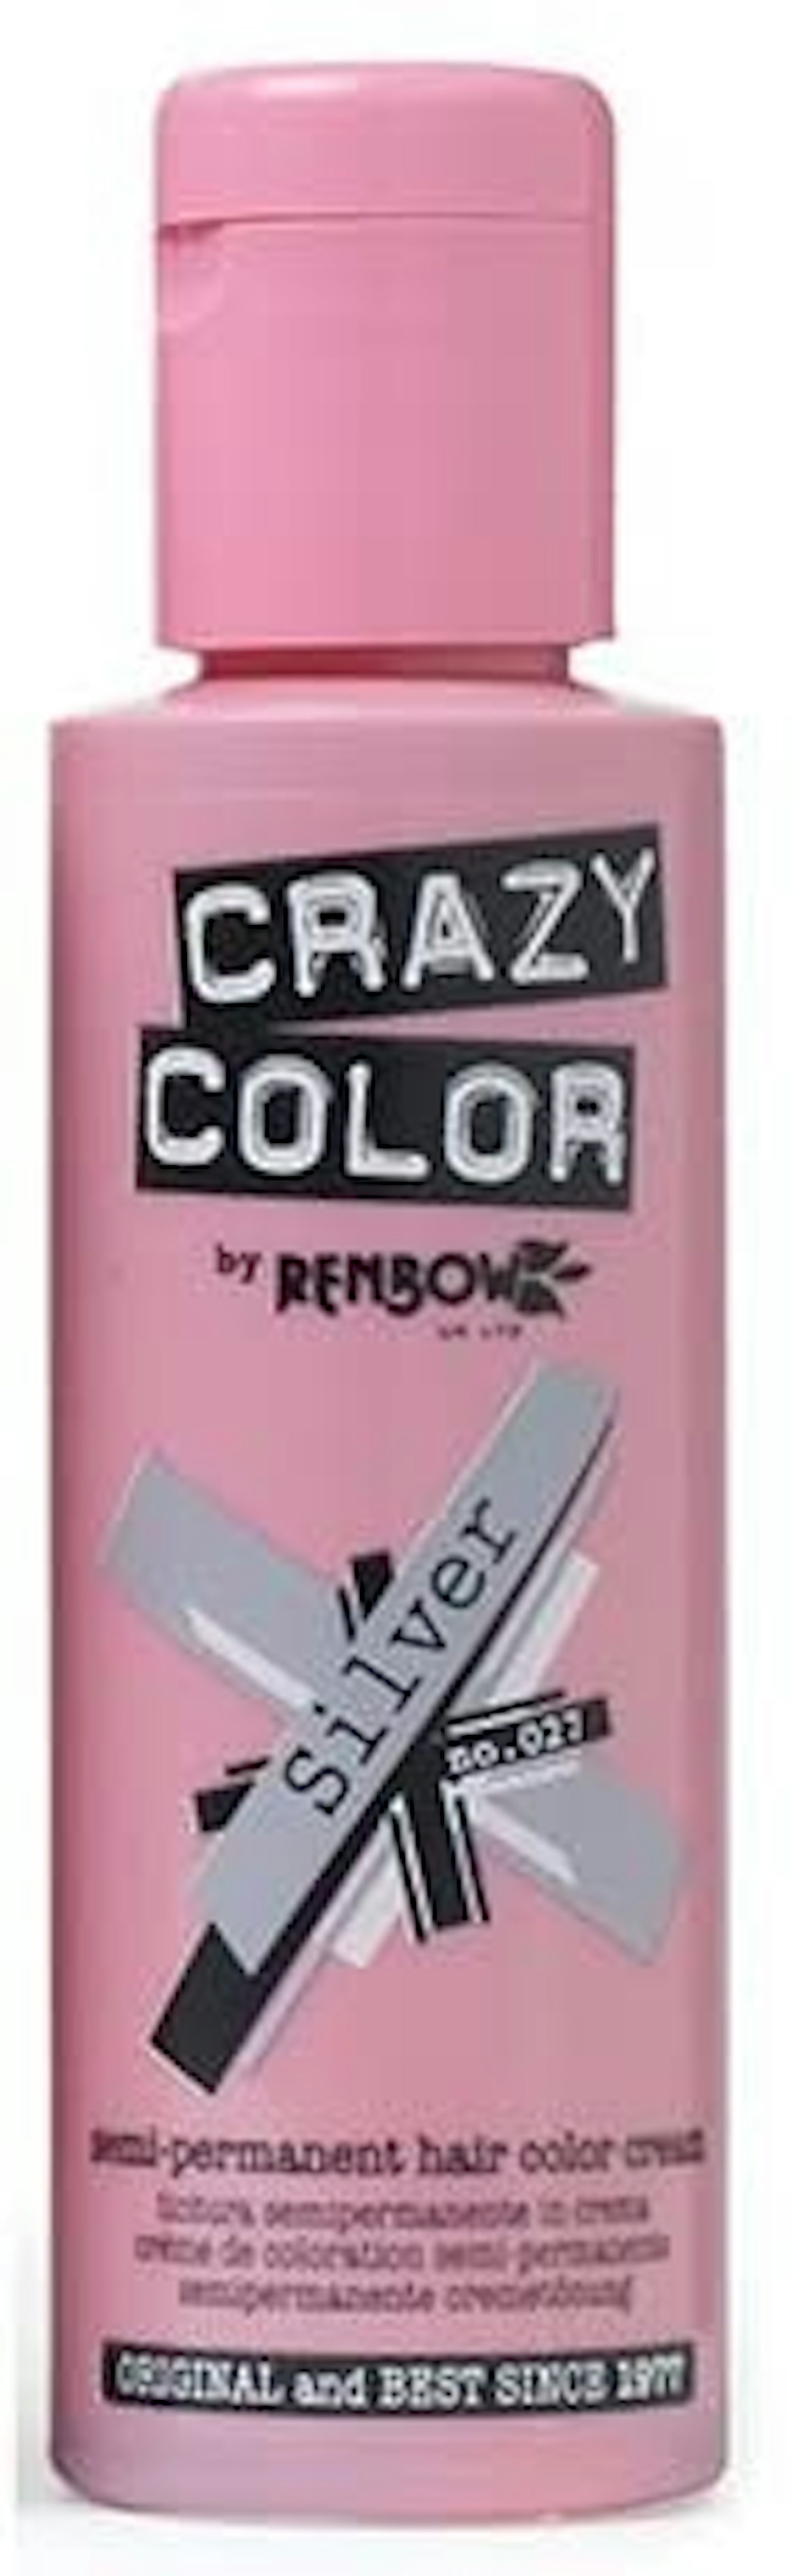 Crazy Colour, Aubergine Hair Dye, £5